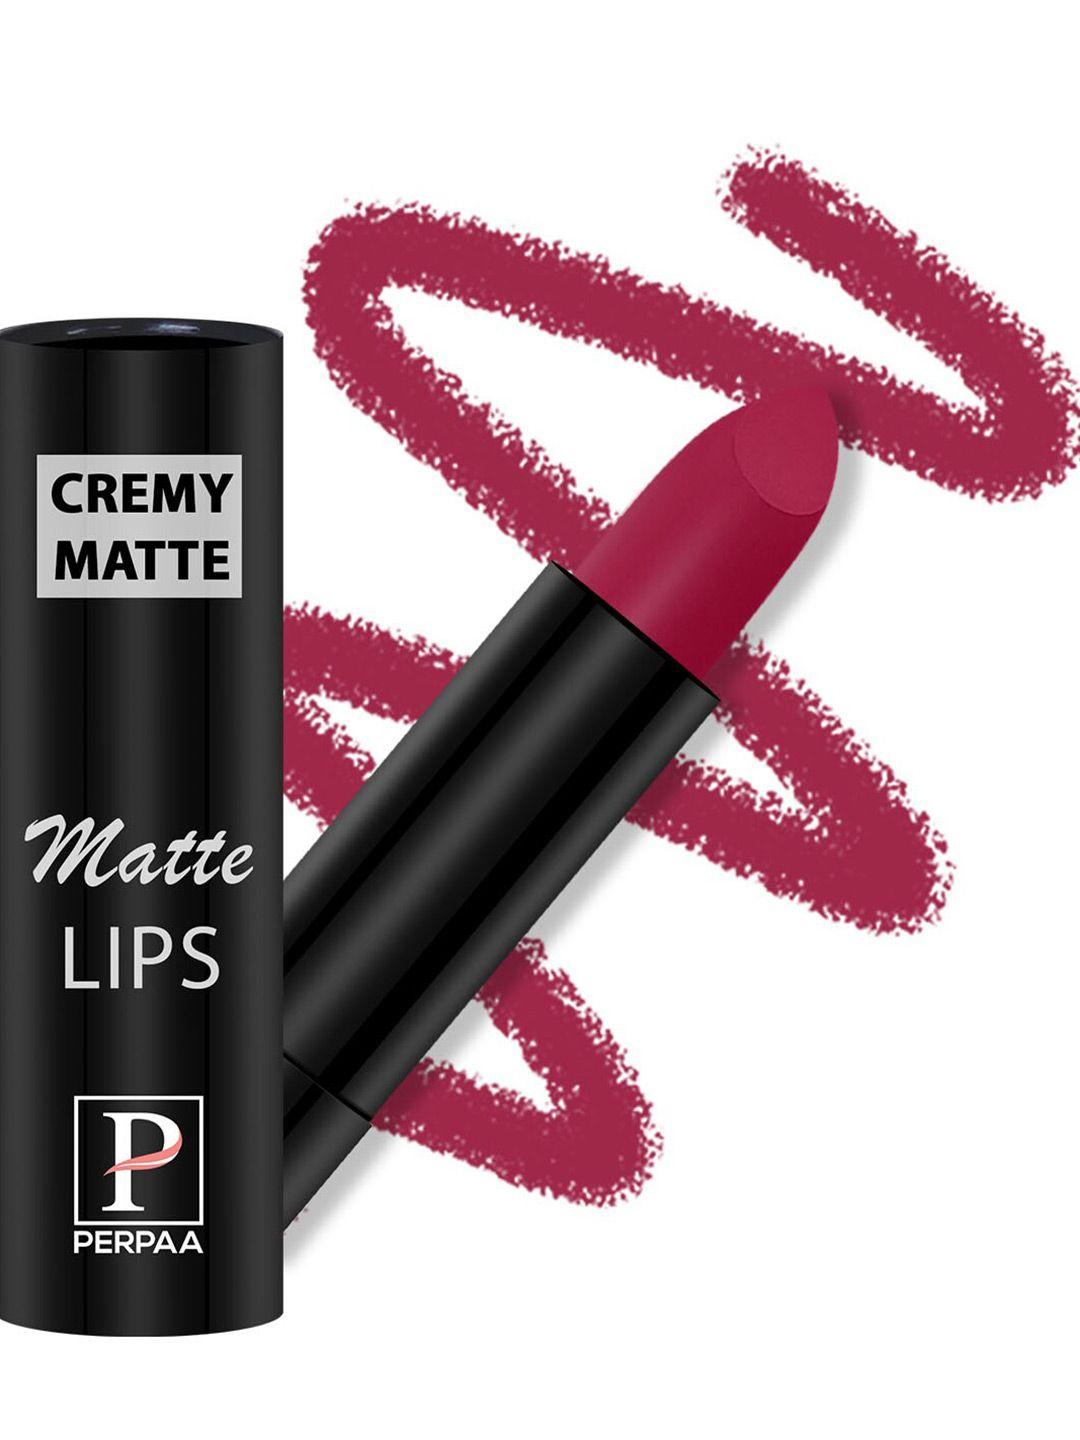 perpaa long lasting & waterproof creamy matte lipstick with vitamin e - ruby magenta 84